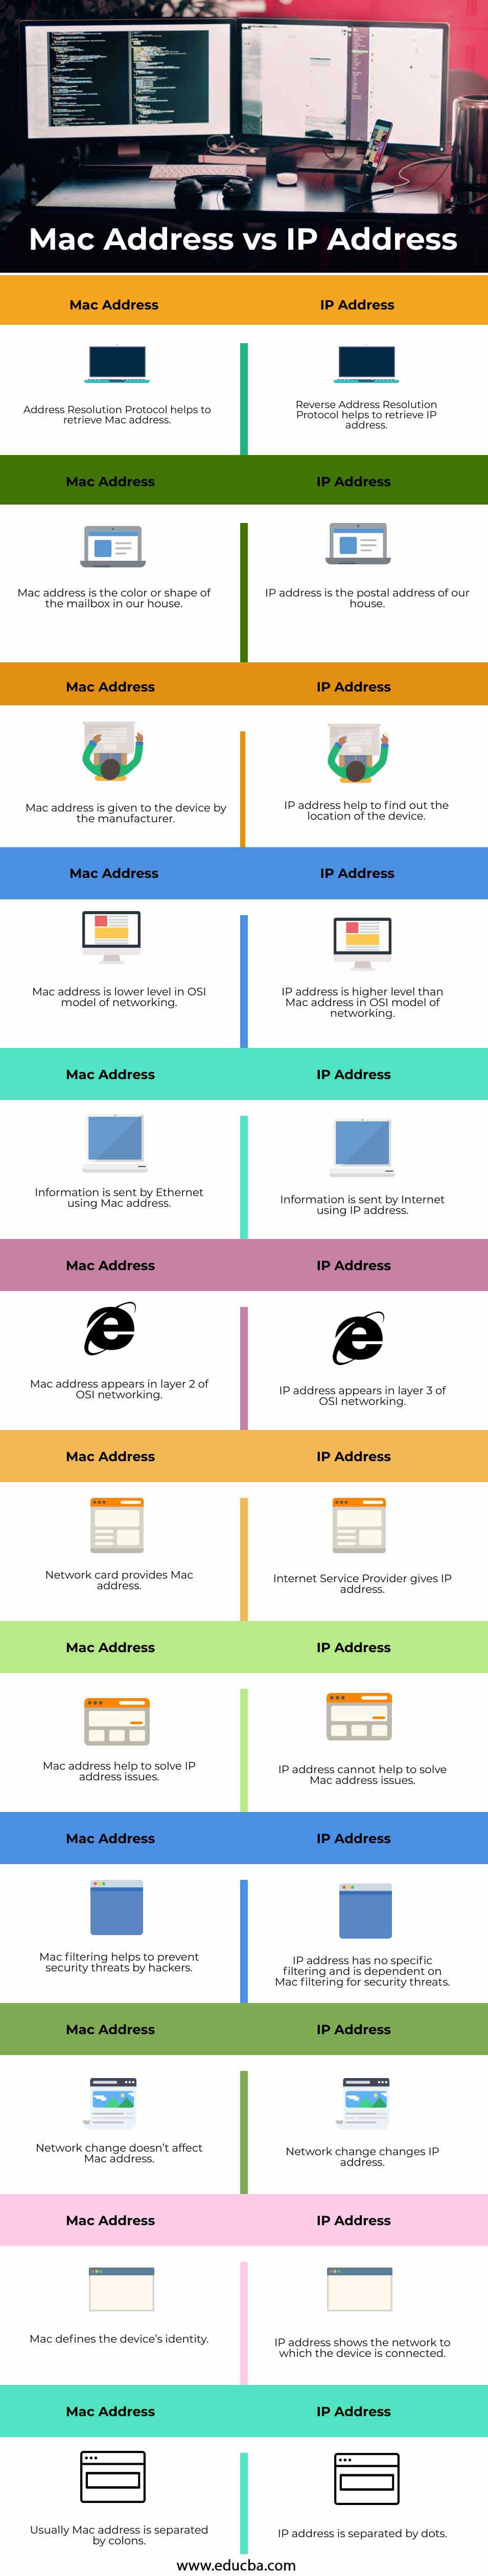 Mac-Address-vs-IP-Address-info